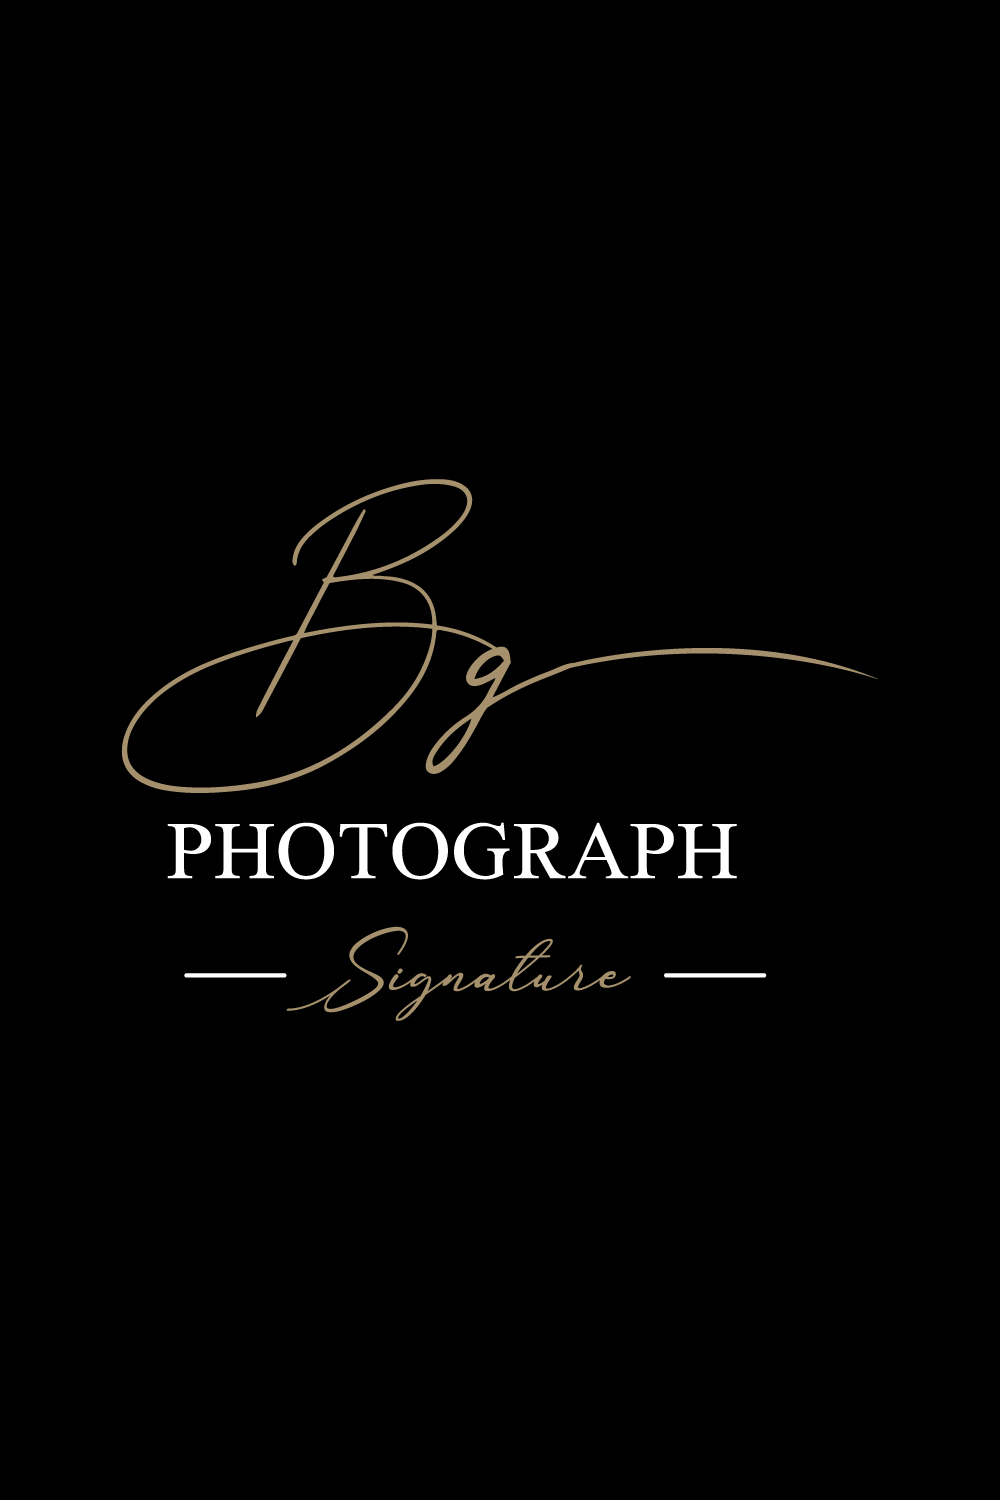 Initials BG photograph Signature logo design BG Signature letters logo best vector template arts pinterest preview image.